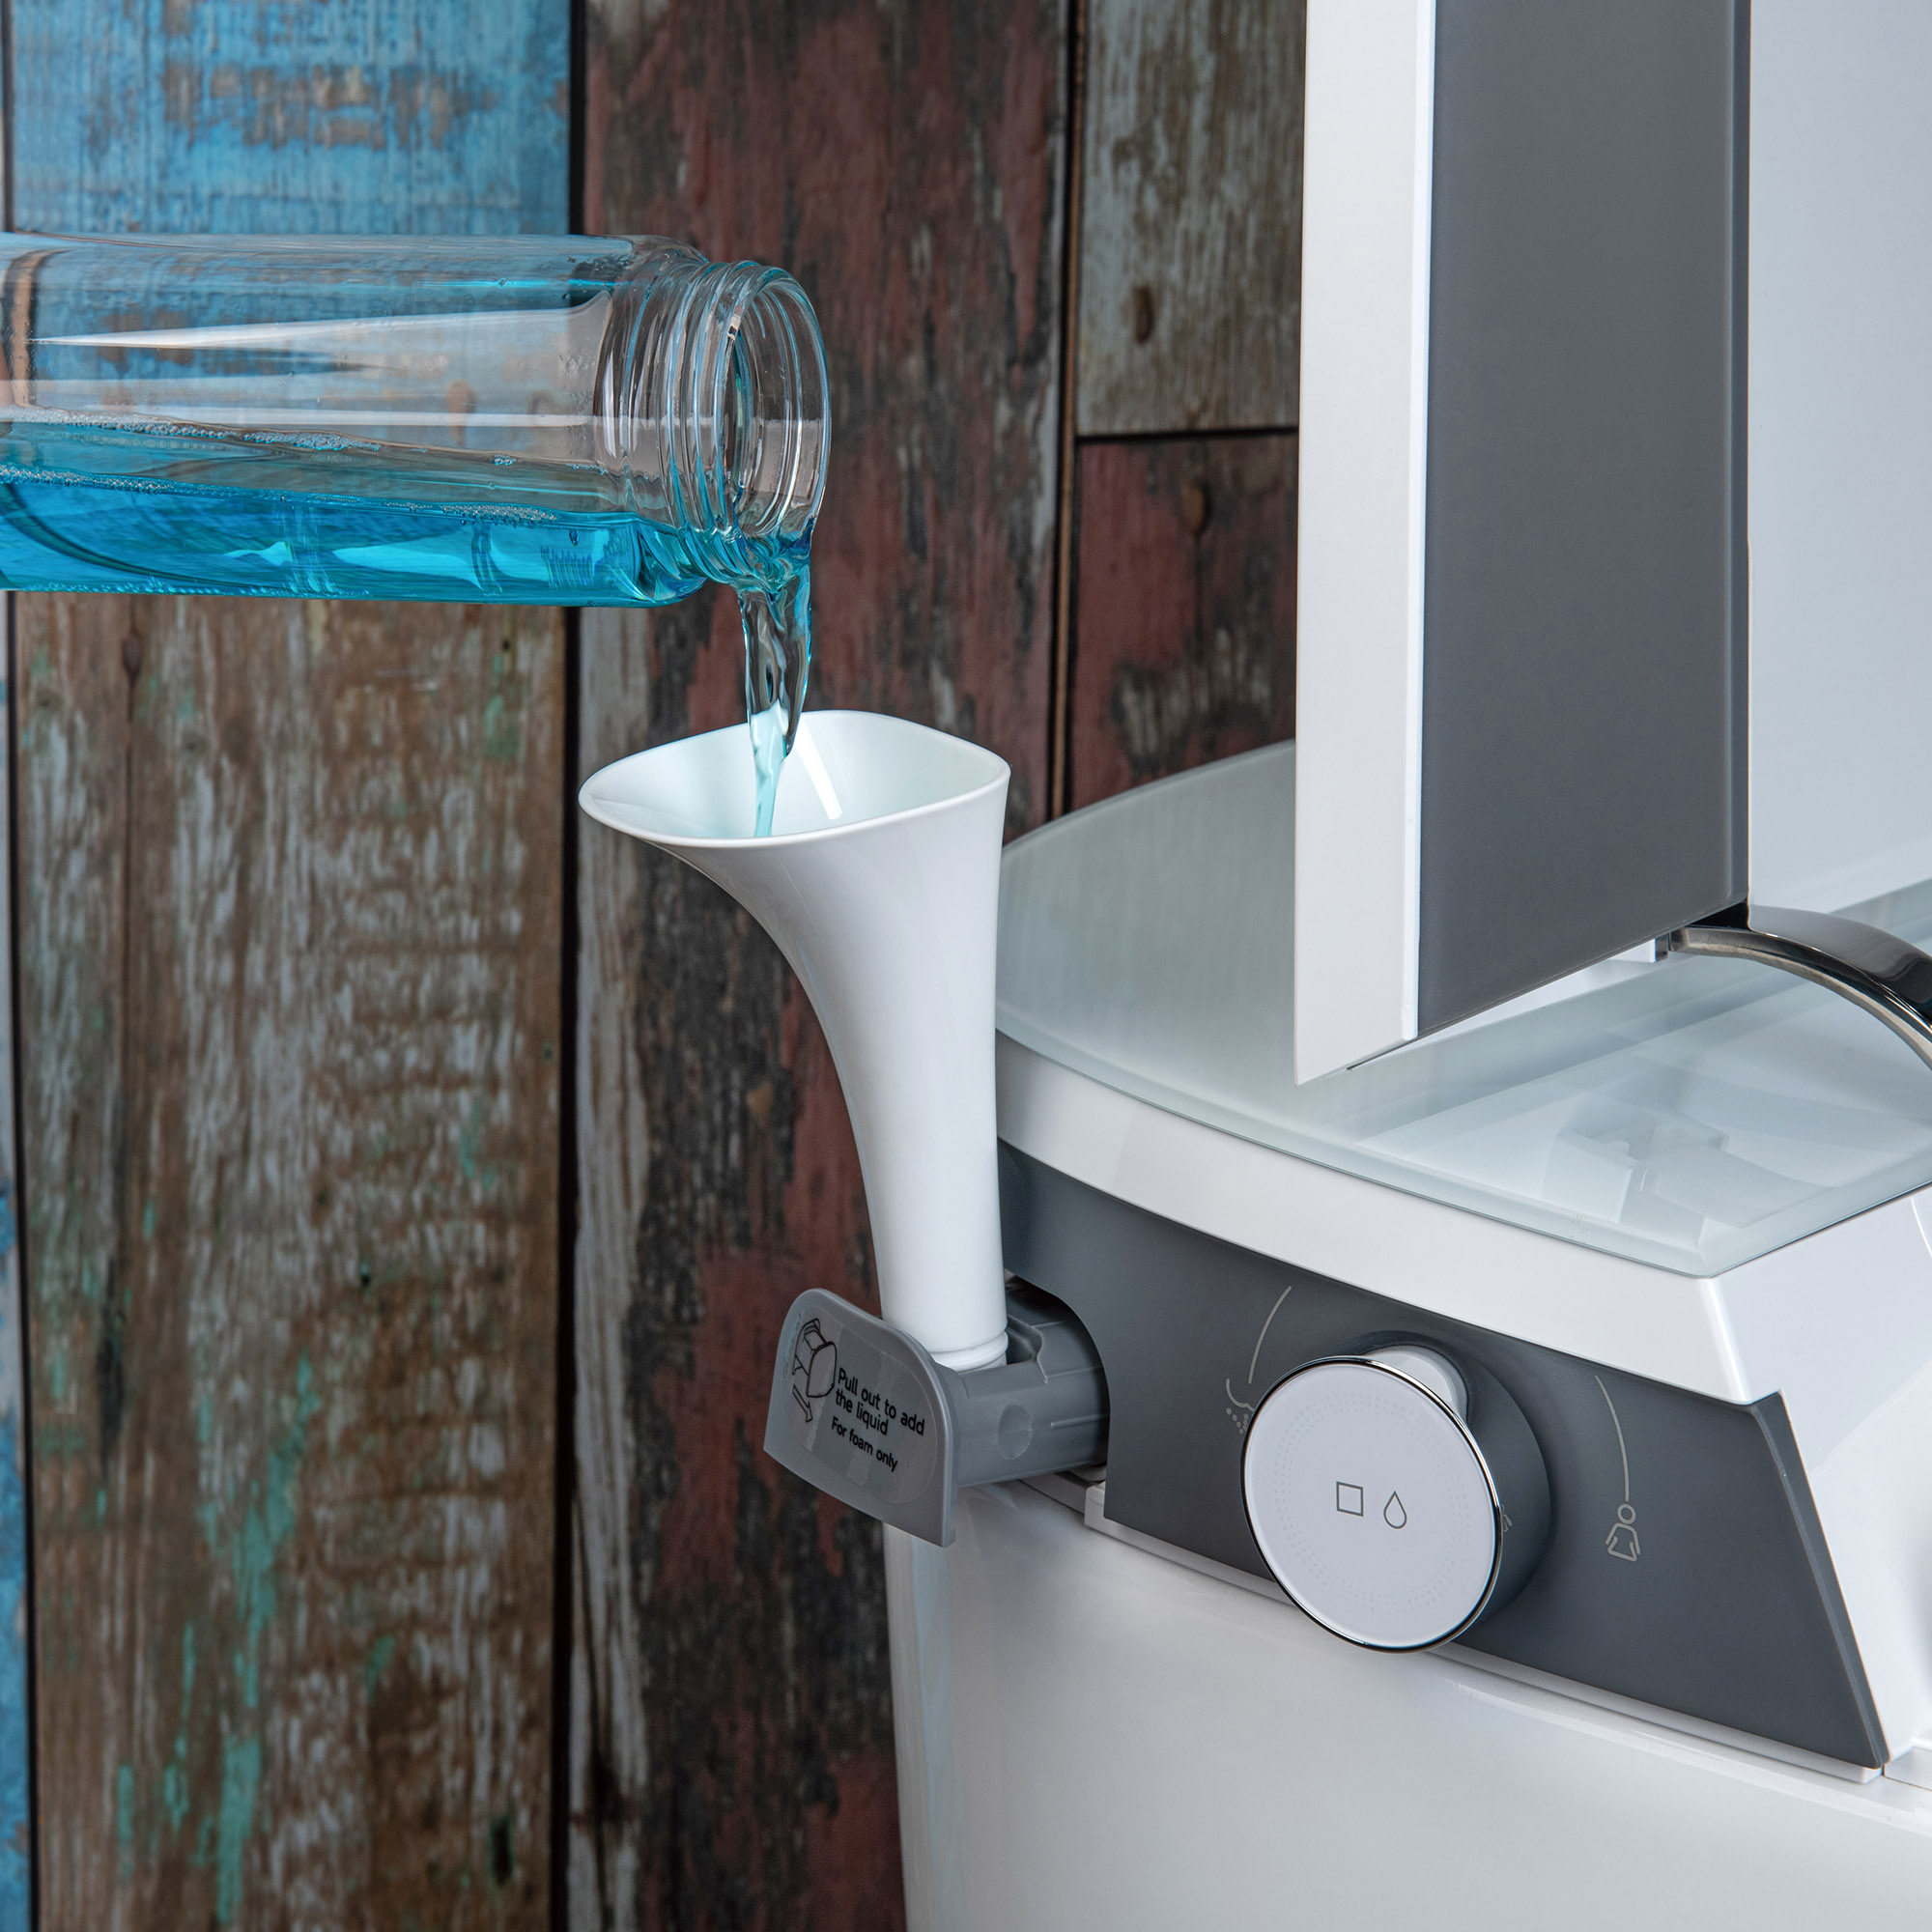  WOODBRIDGE B0931S Smart Bidet Toilet with 1.28 GPF Dual Flush Auto Open & Close, Foot Sensor Flush, Voice Control,1000 Gram Map Flushing Score, LED Display, Chair Height Design and Cleaning Foam Dispenser_13928